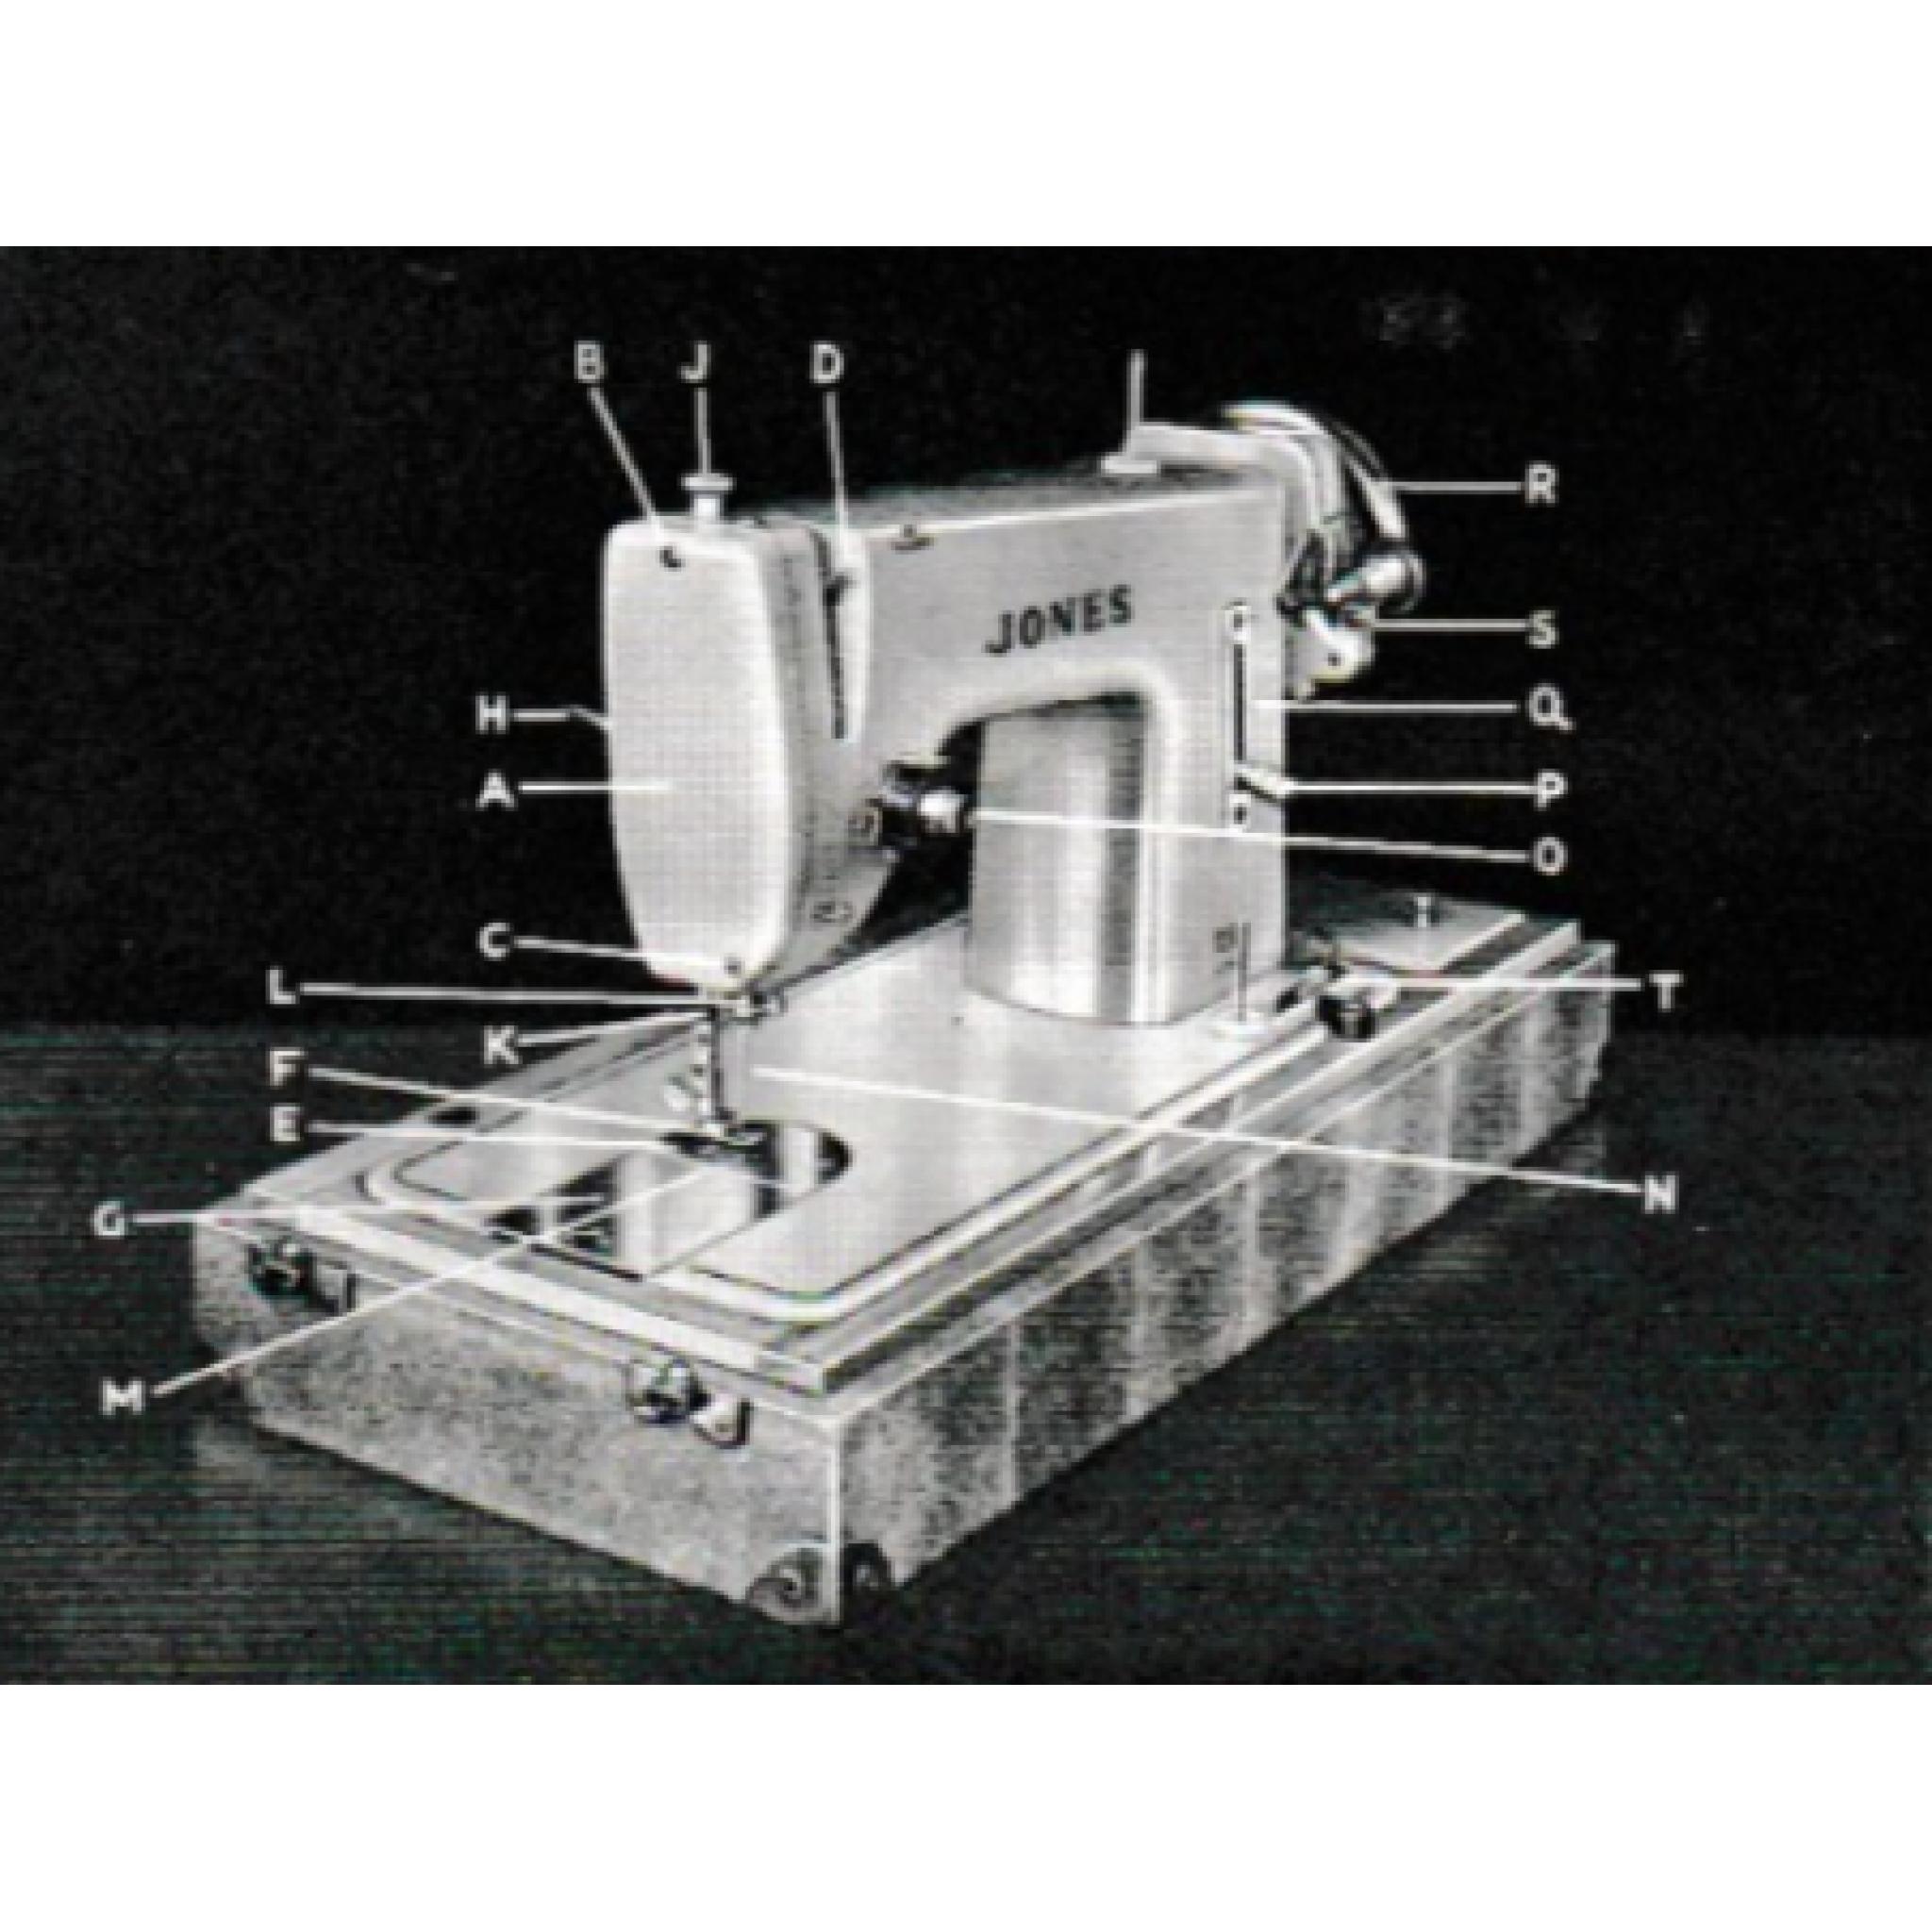 JONES Model C Sewing Machine Instruction Manual (Printed)